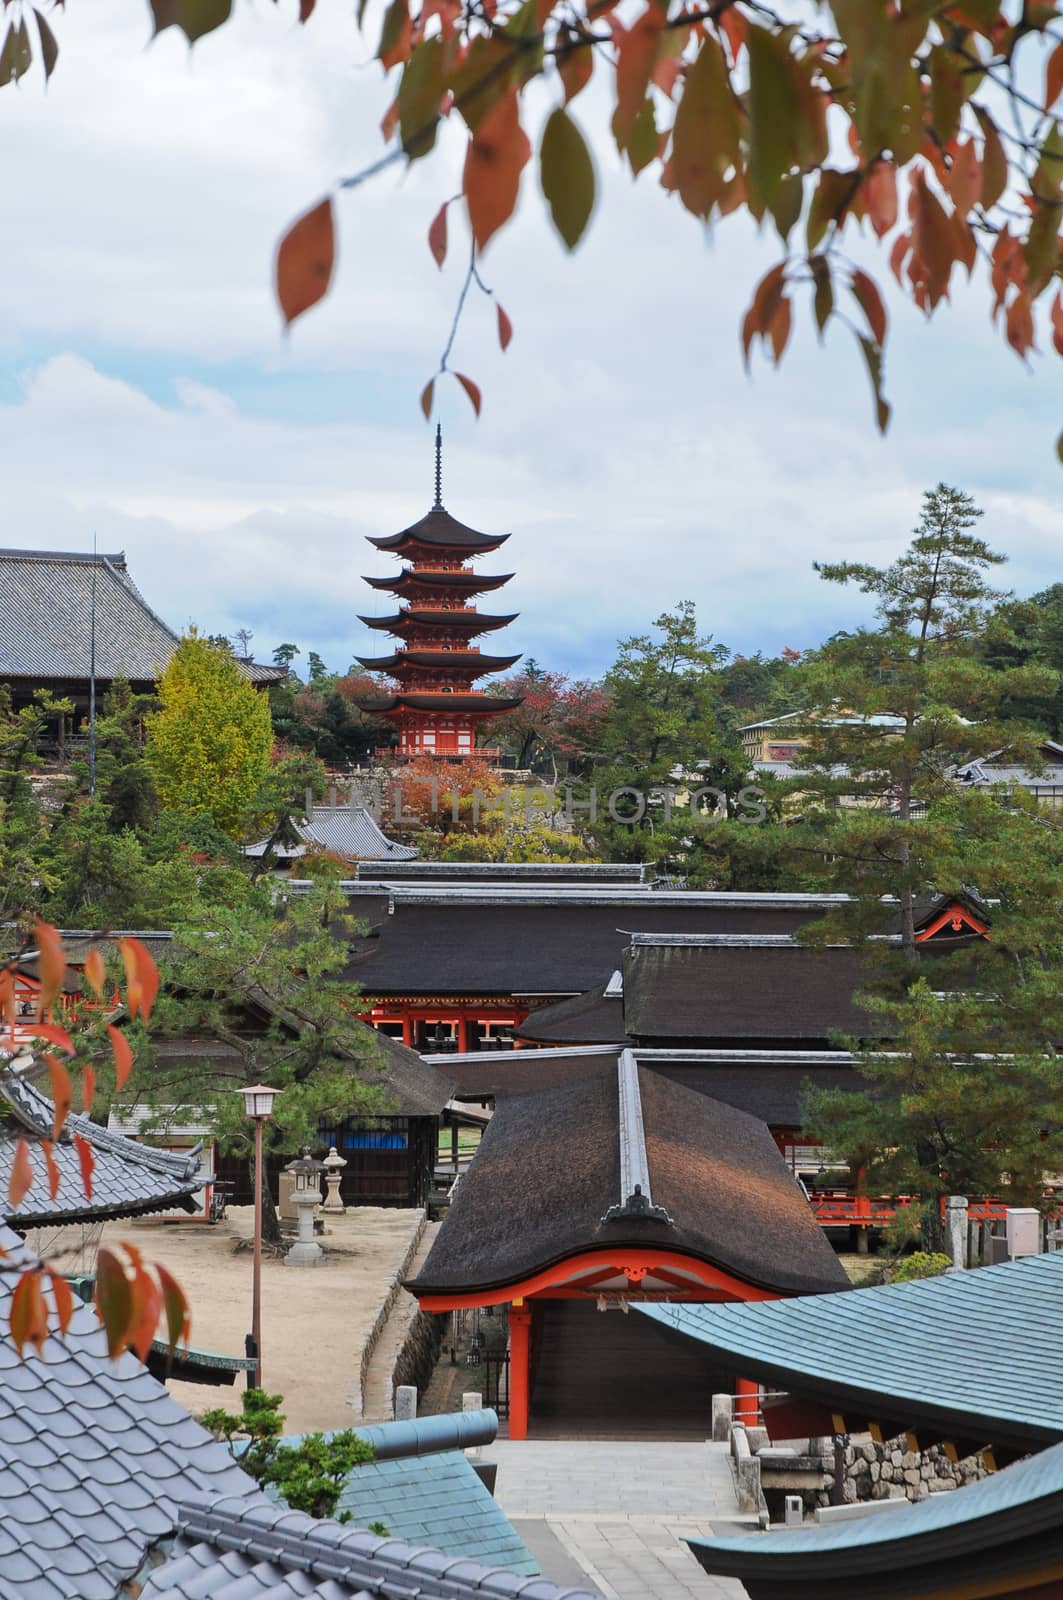 Famous Shinto pagoda in Miyajima island Japan by eyeofpaul